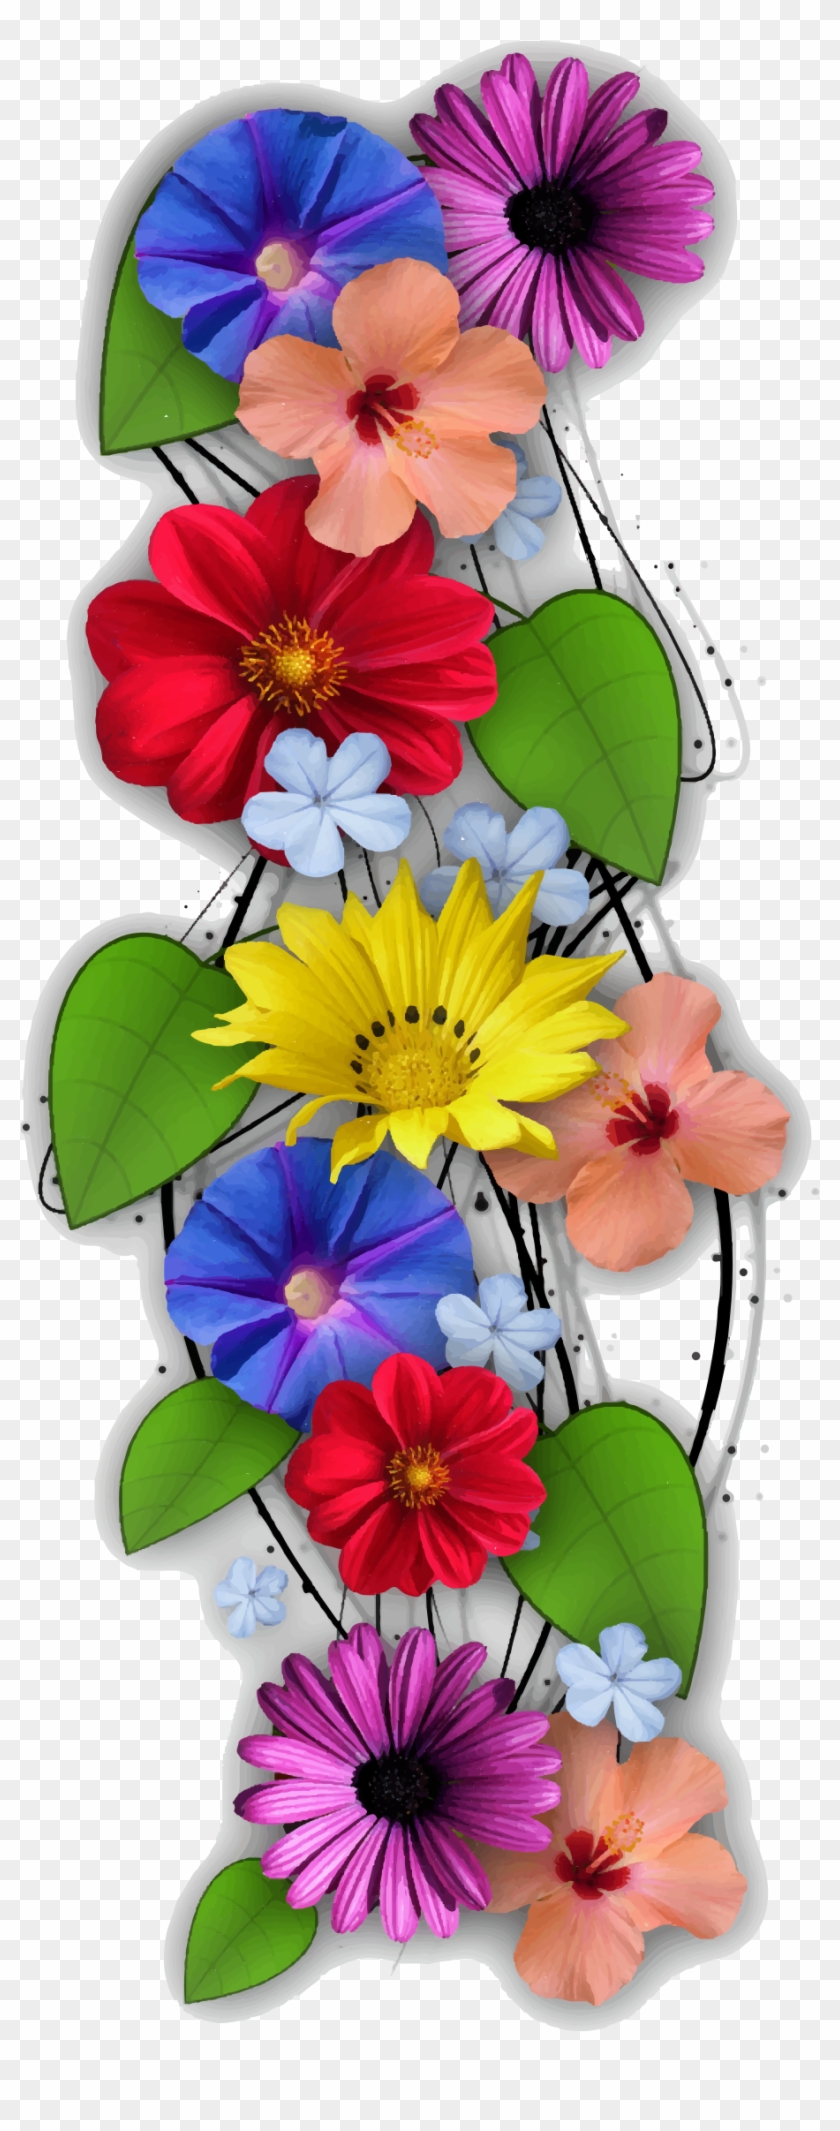 Vertical Flowers - Vertical Images Of Flowers #275008